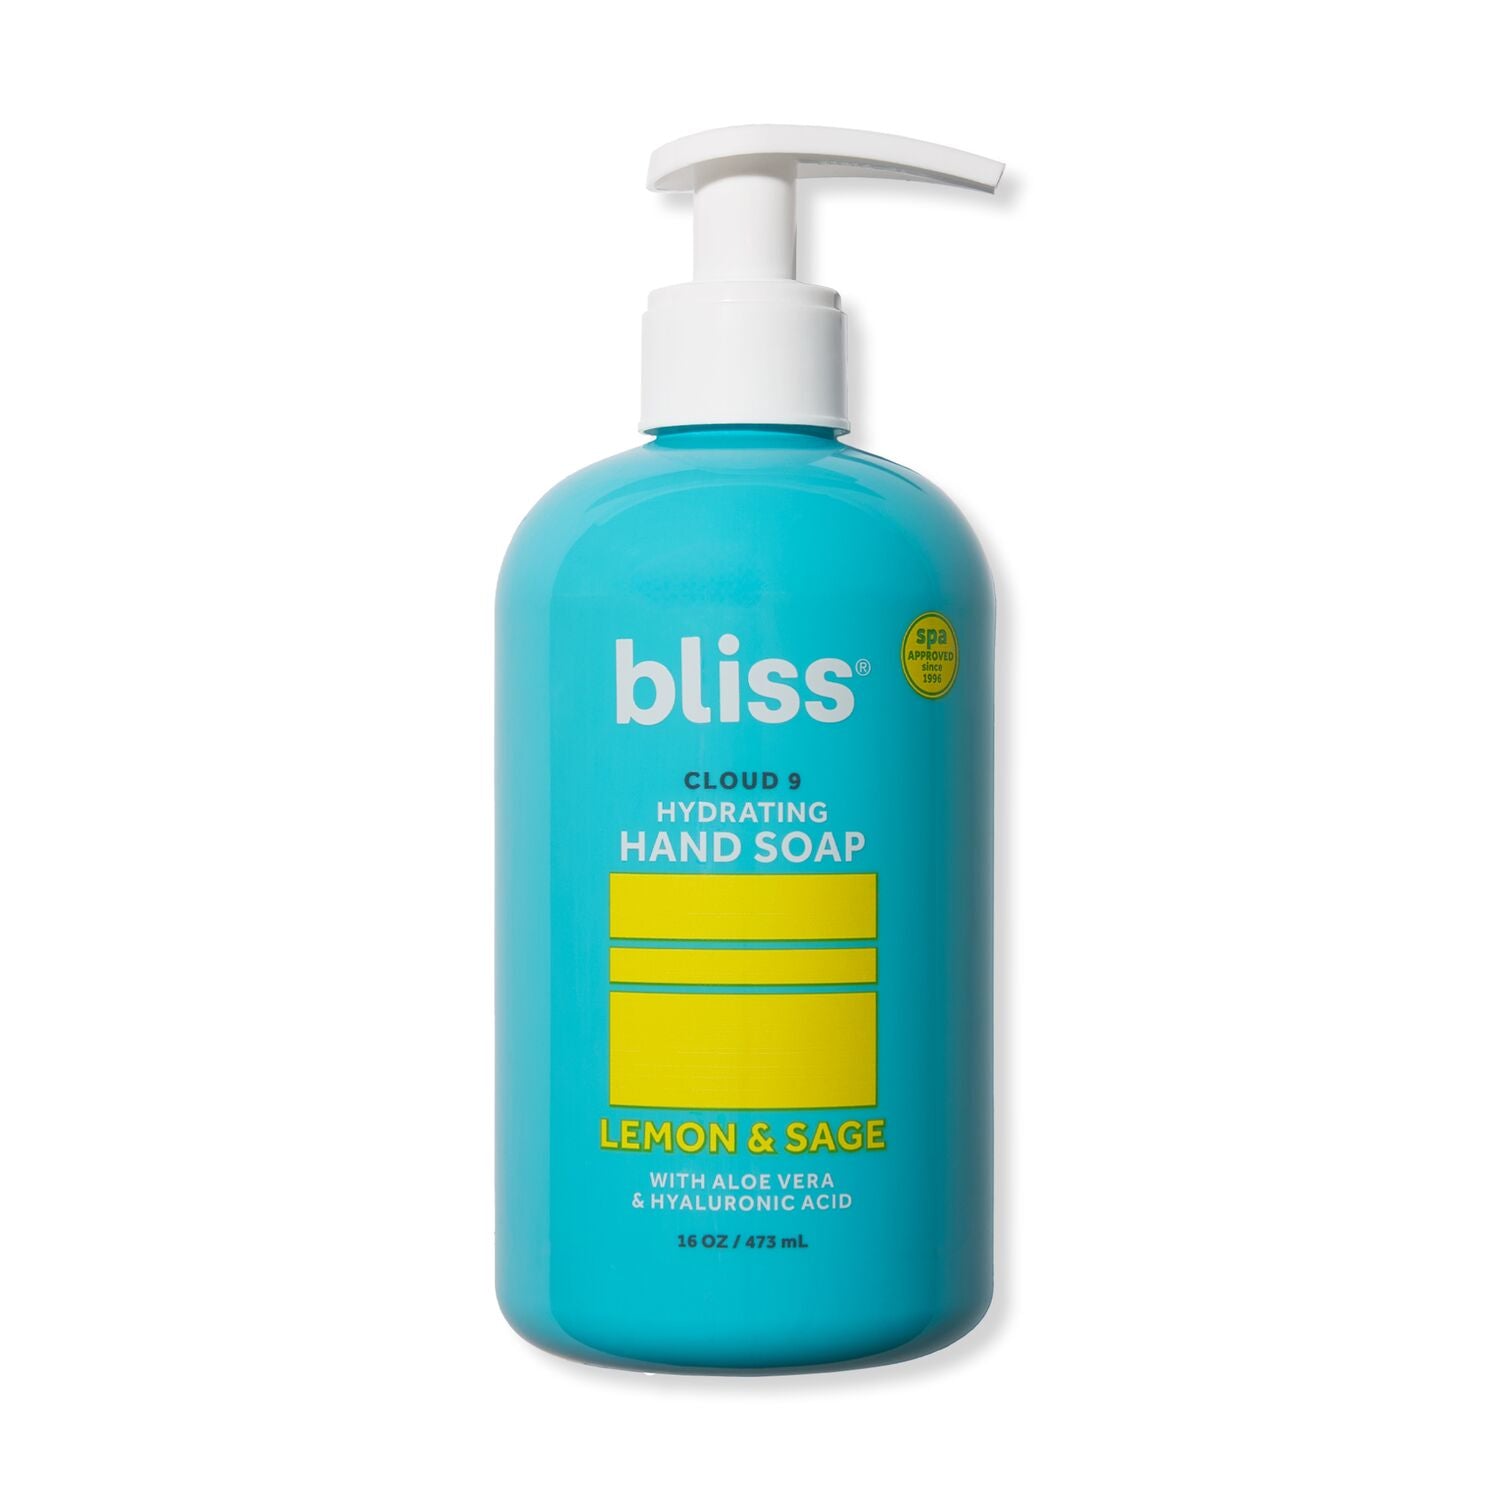 Bliss Cloud 9 Hydrating Hand Soap, Lemon & Sage With Aloe Vera & Hyaluronic Acid